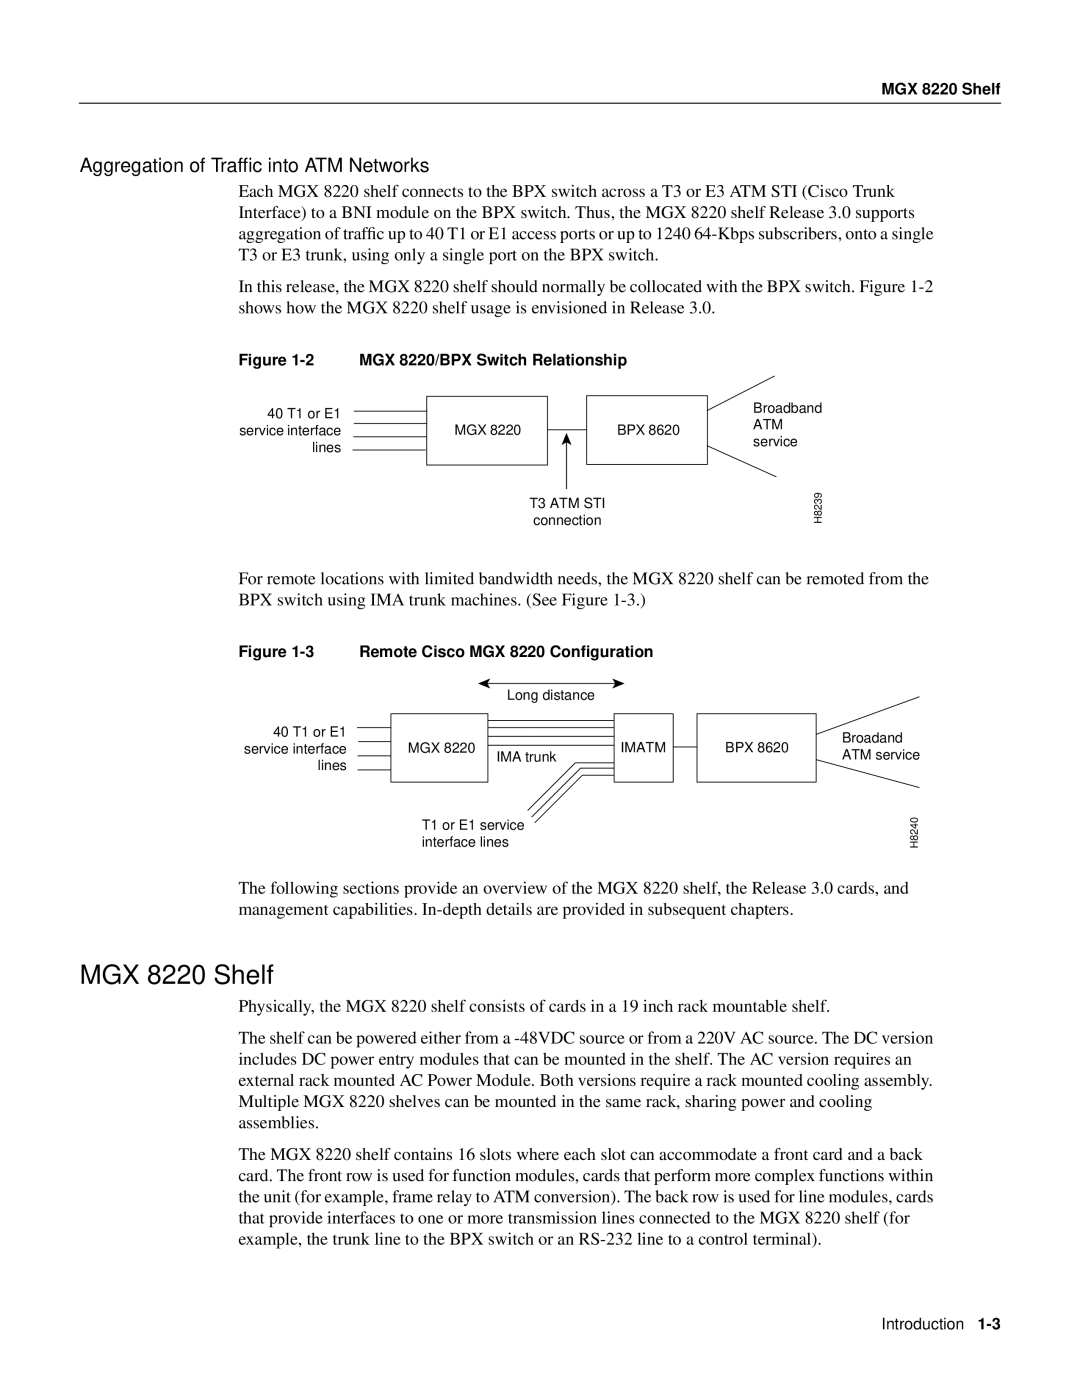 Cisco Systems manual MGX 8220 Shelf, Aggregation of Trafﬁc into ATM Networks 